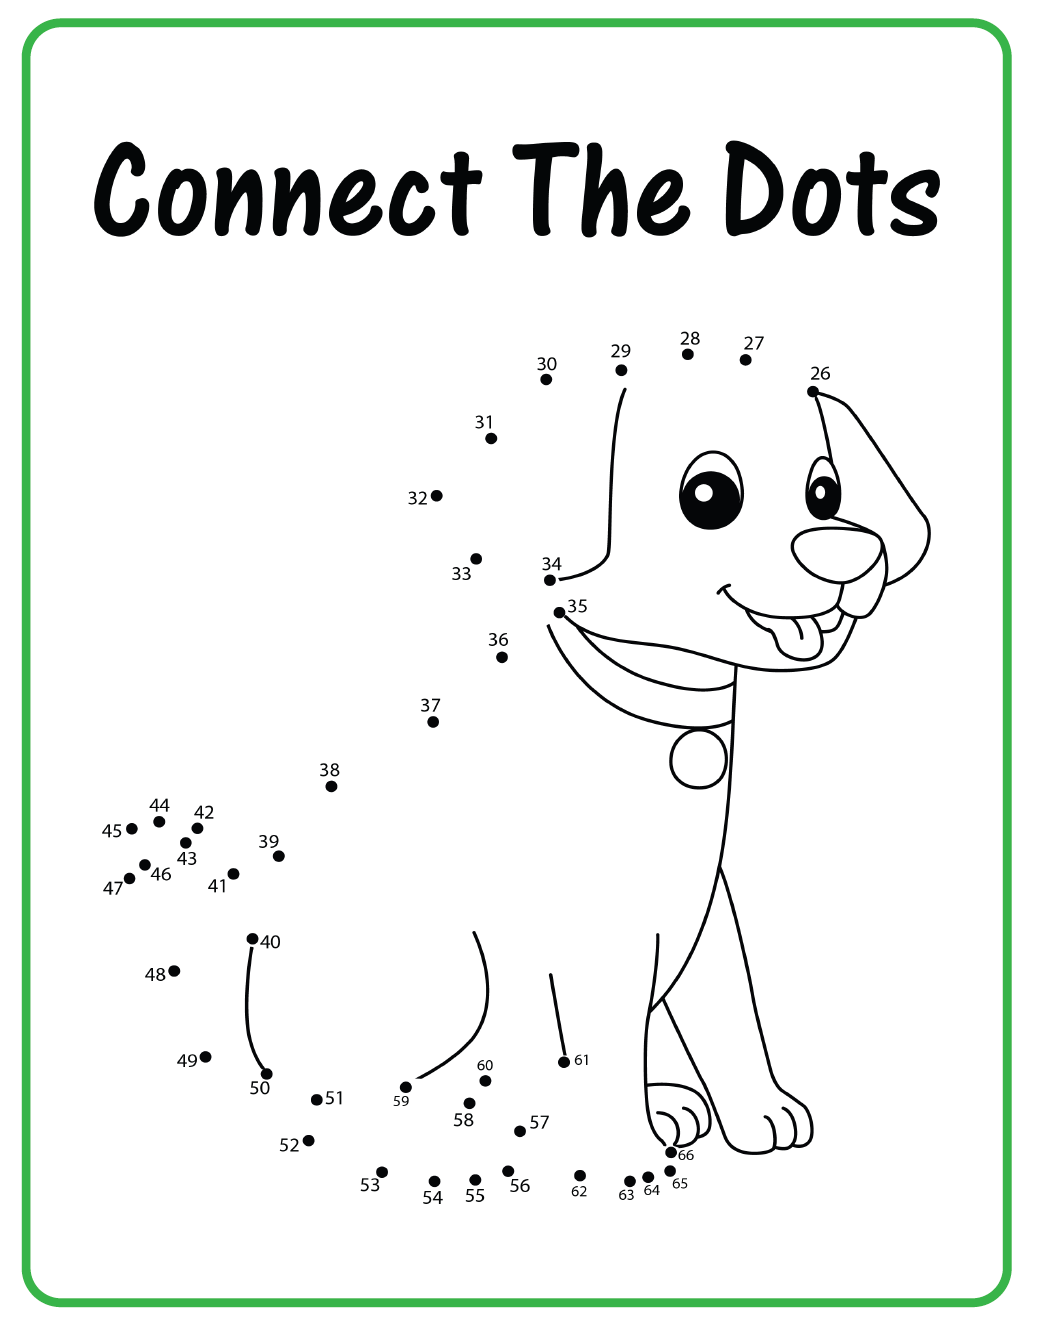 The Ultimate Puppy Dog Preschool Activity Book